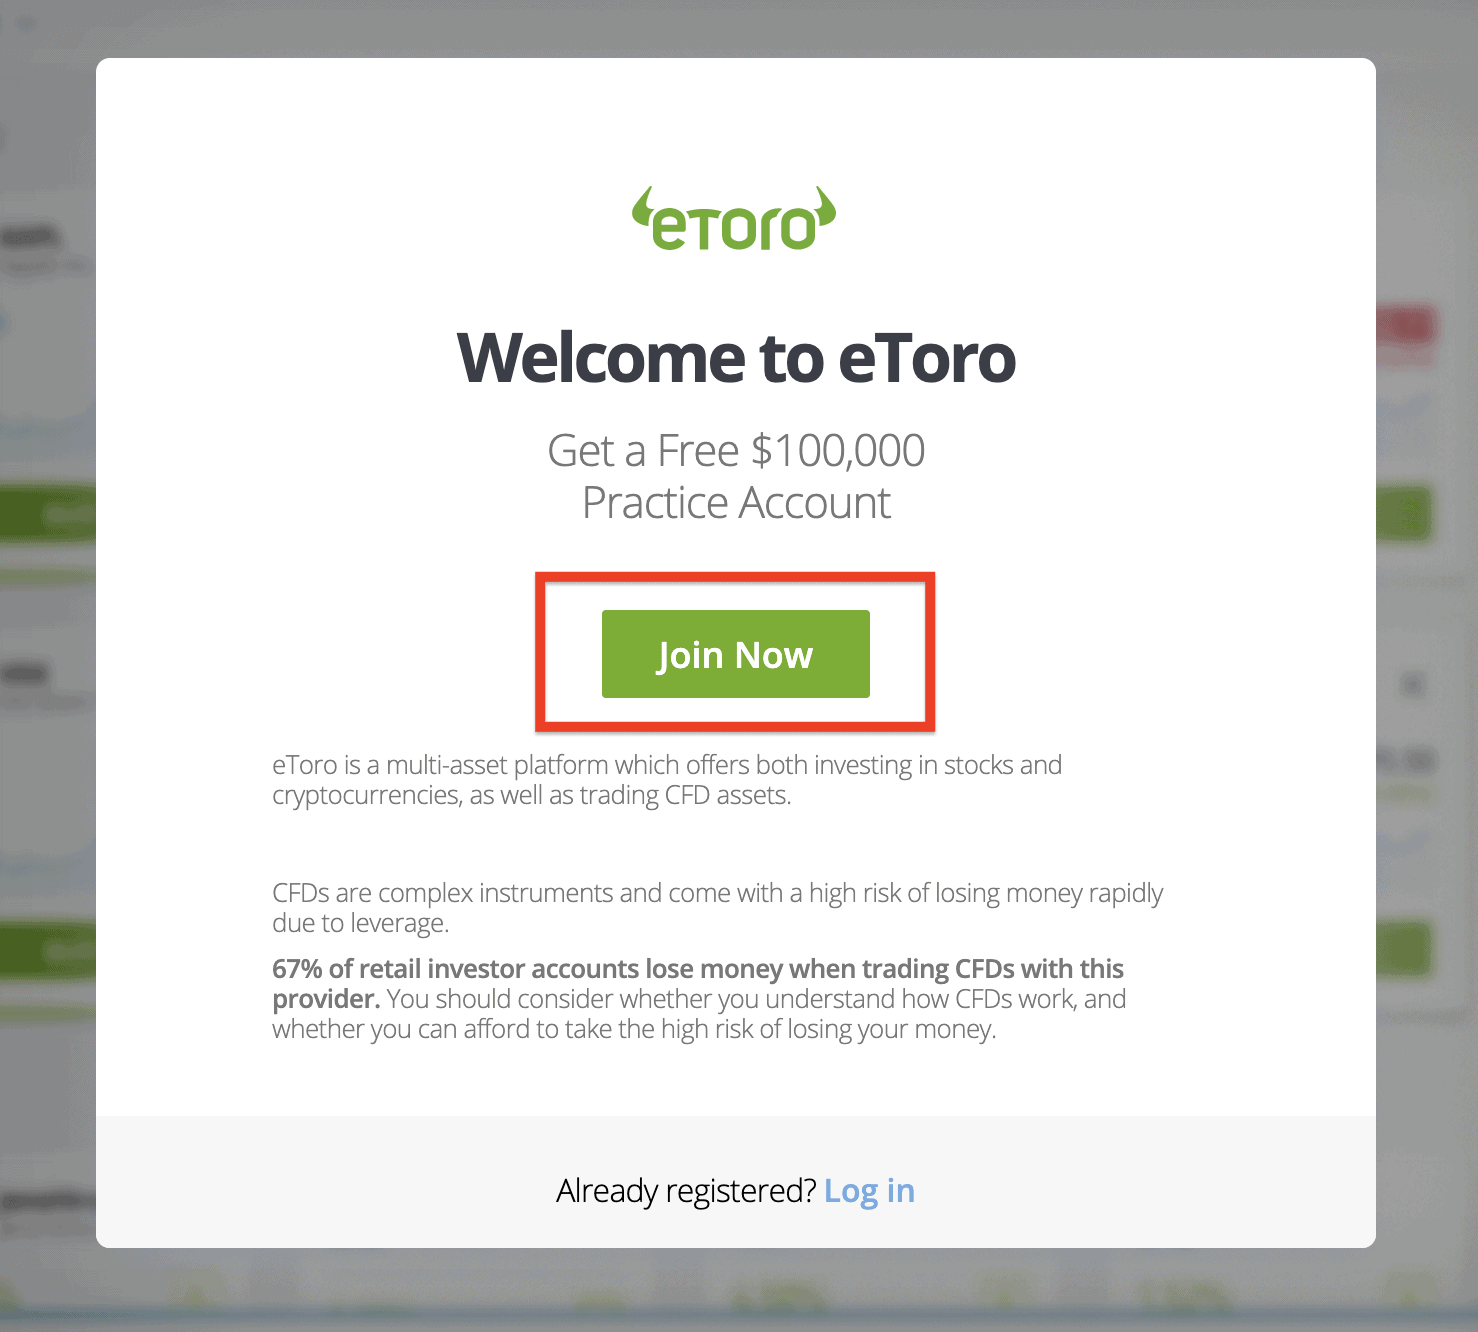 etoro open account - join now